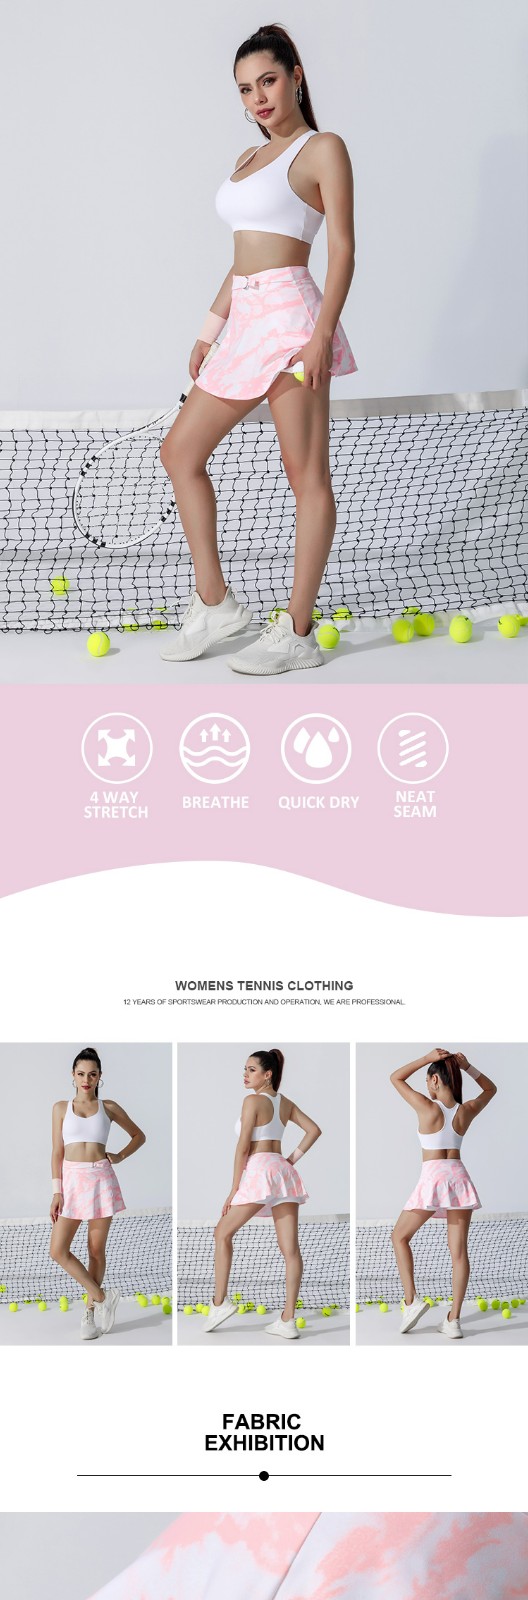 INGOR custom tennis wear ladies supplier for women-2